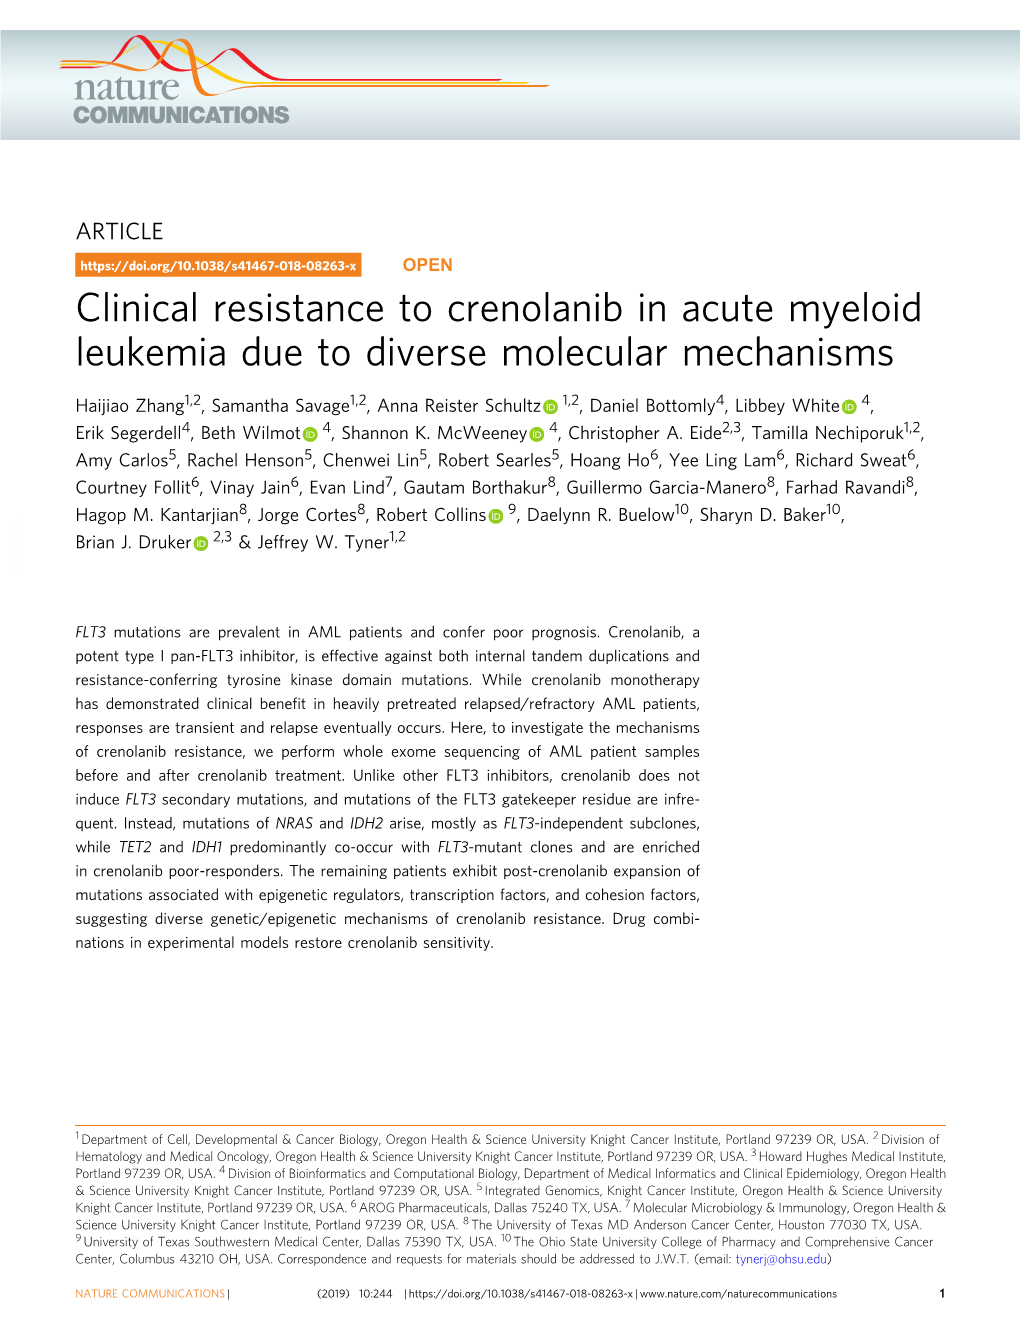 Clinical Resistance to Crenolanib in Acute Myeloid Leukemia Due to Diverse Molecular Mechanisms